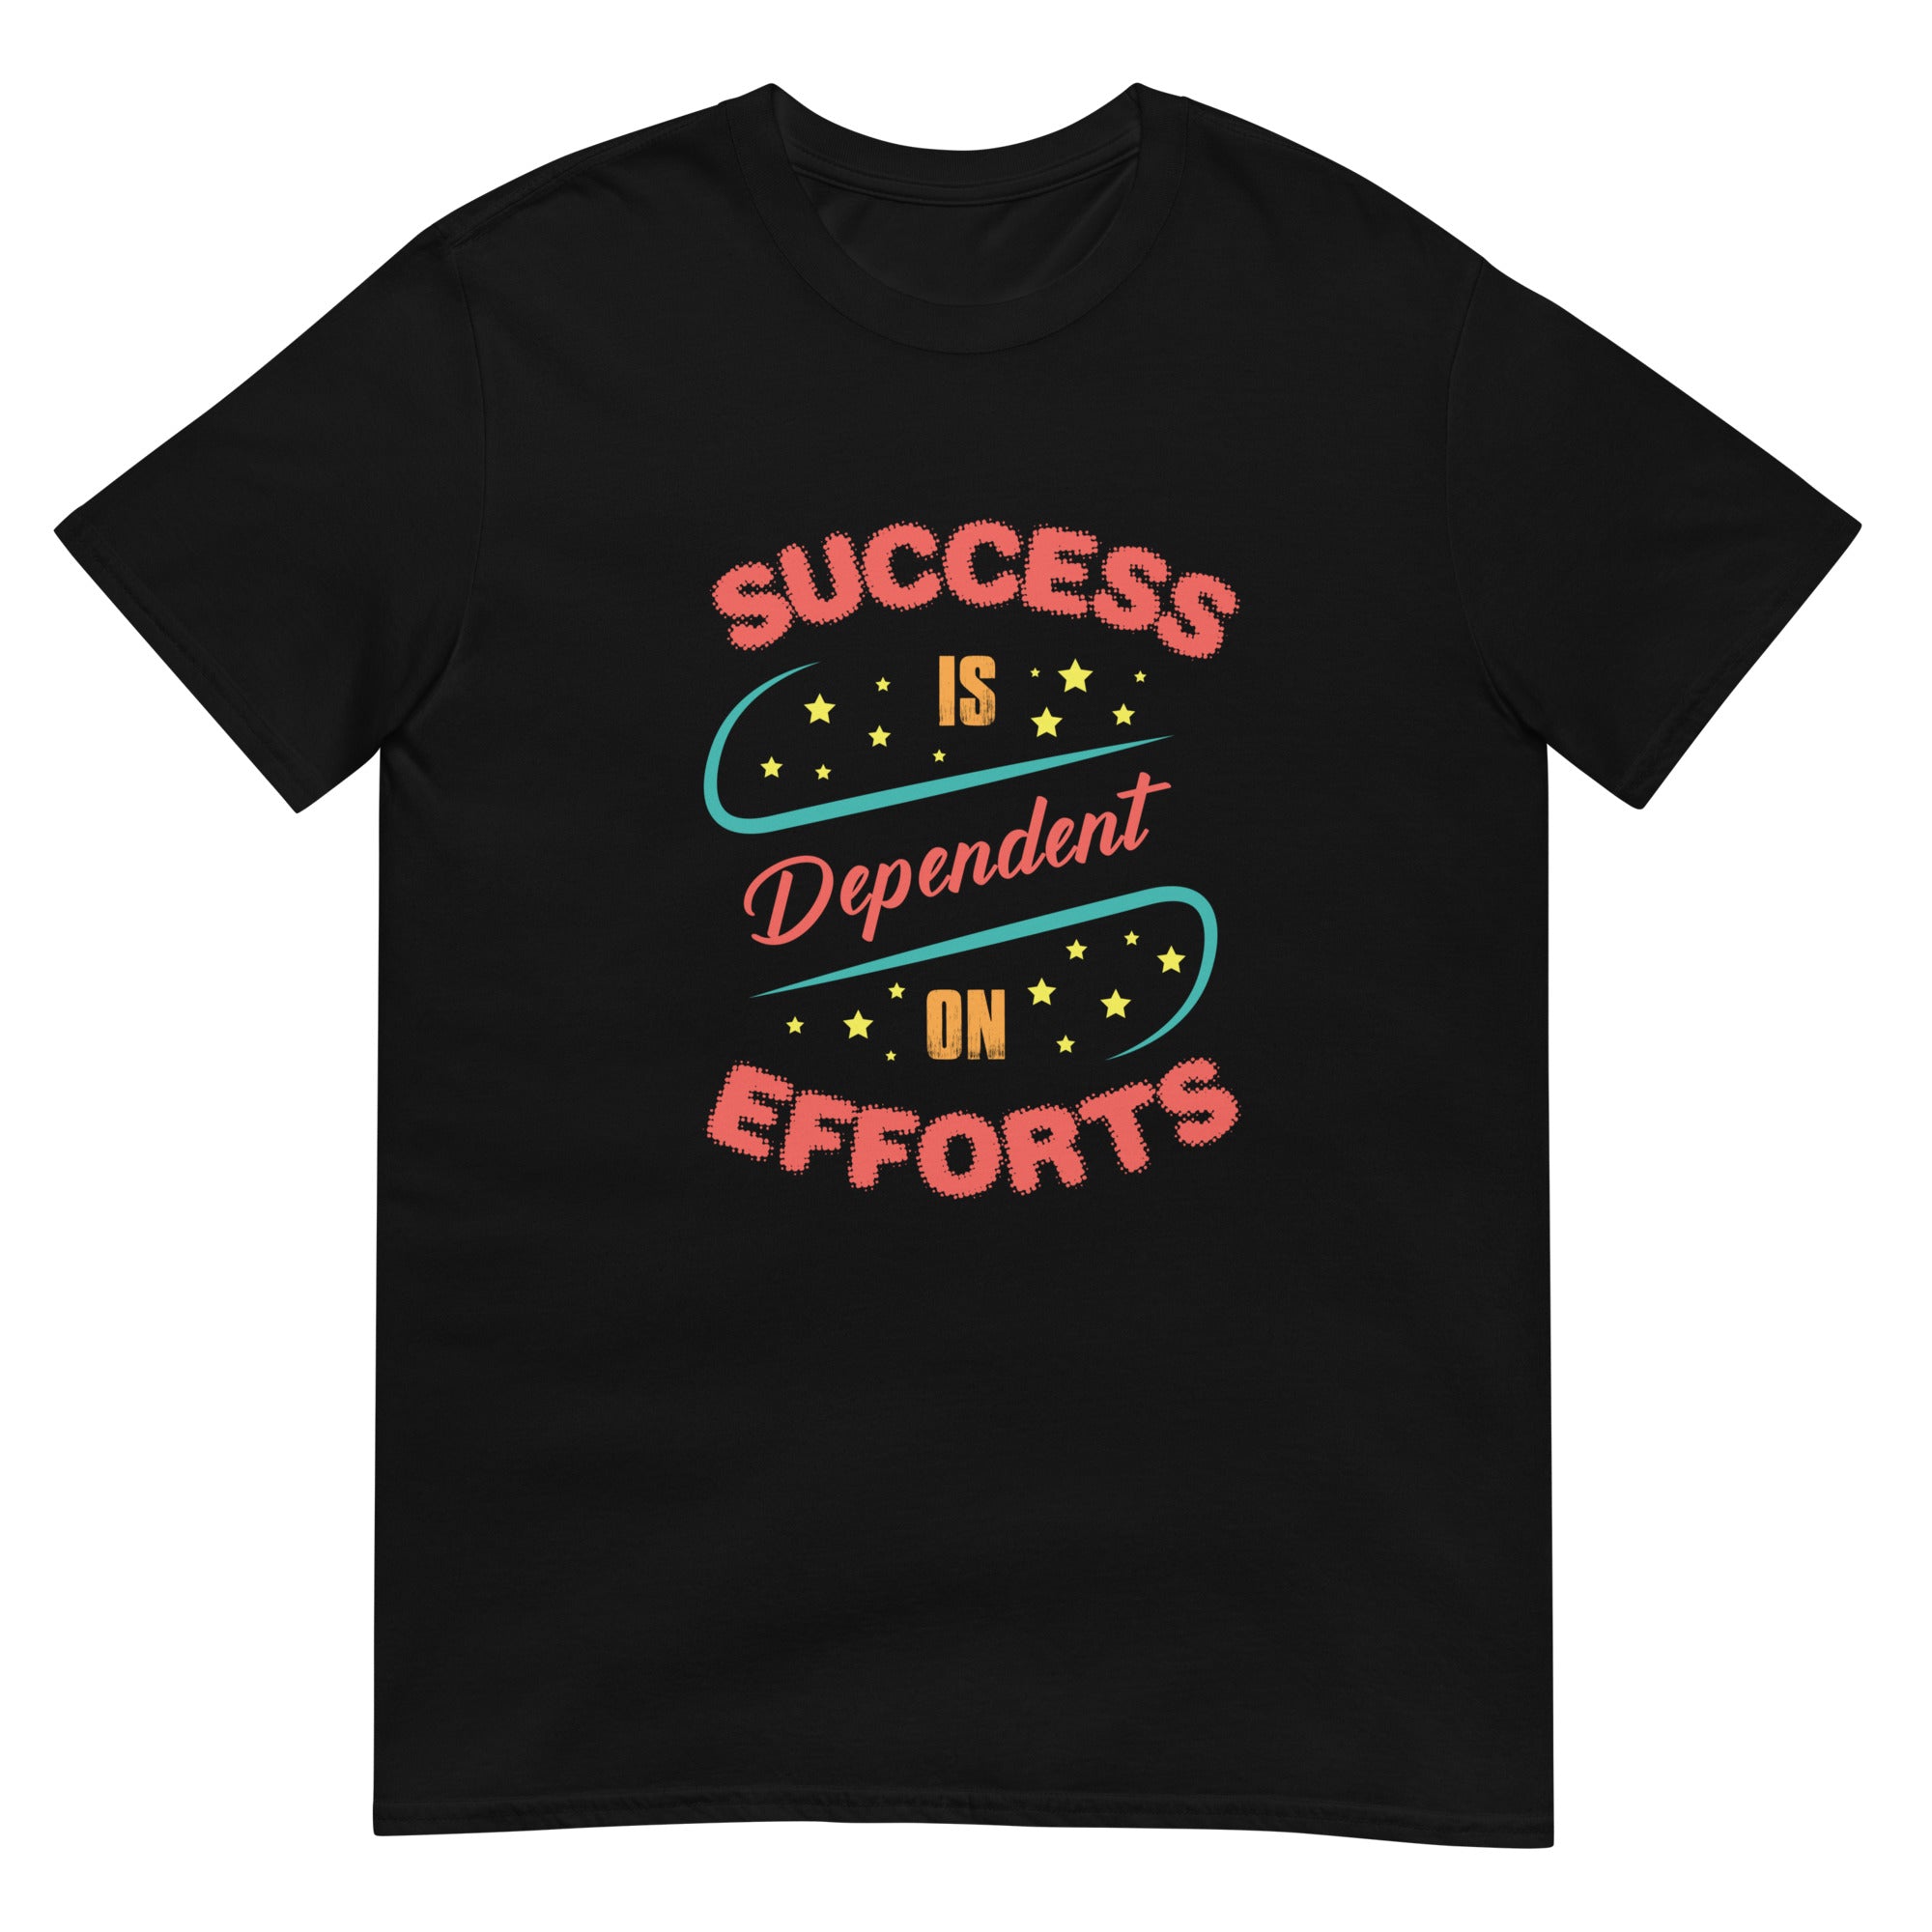 Success is Dependent on Effort Unisex T-Shirt